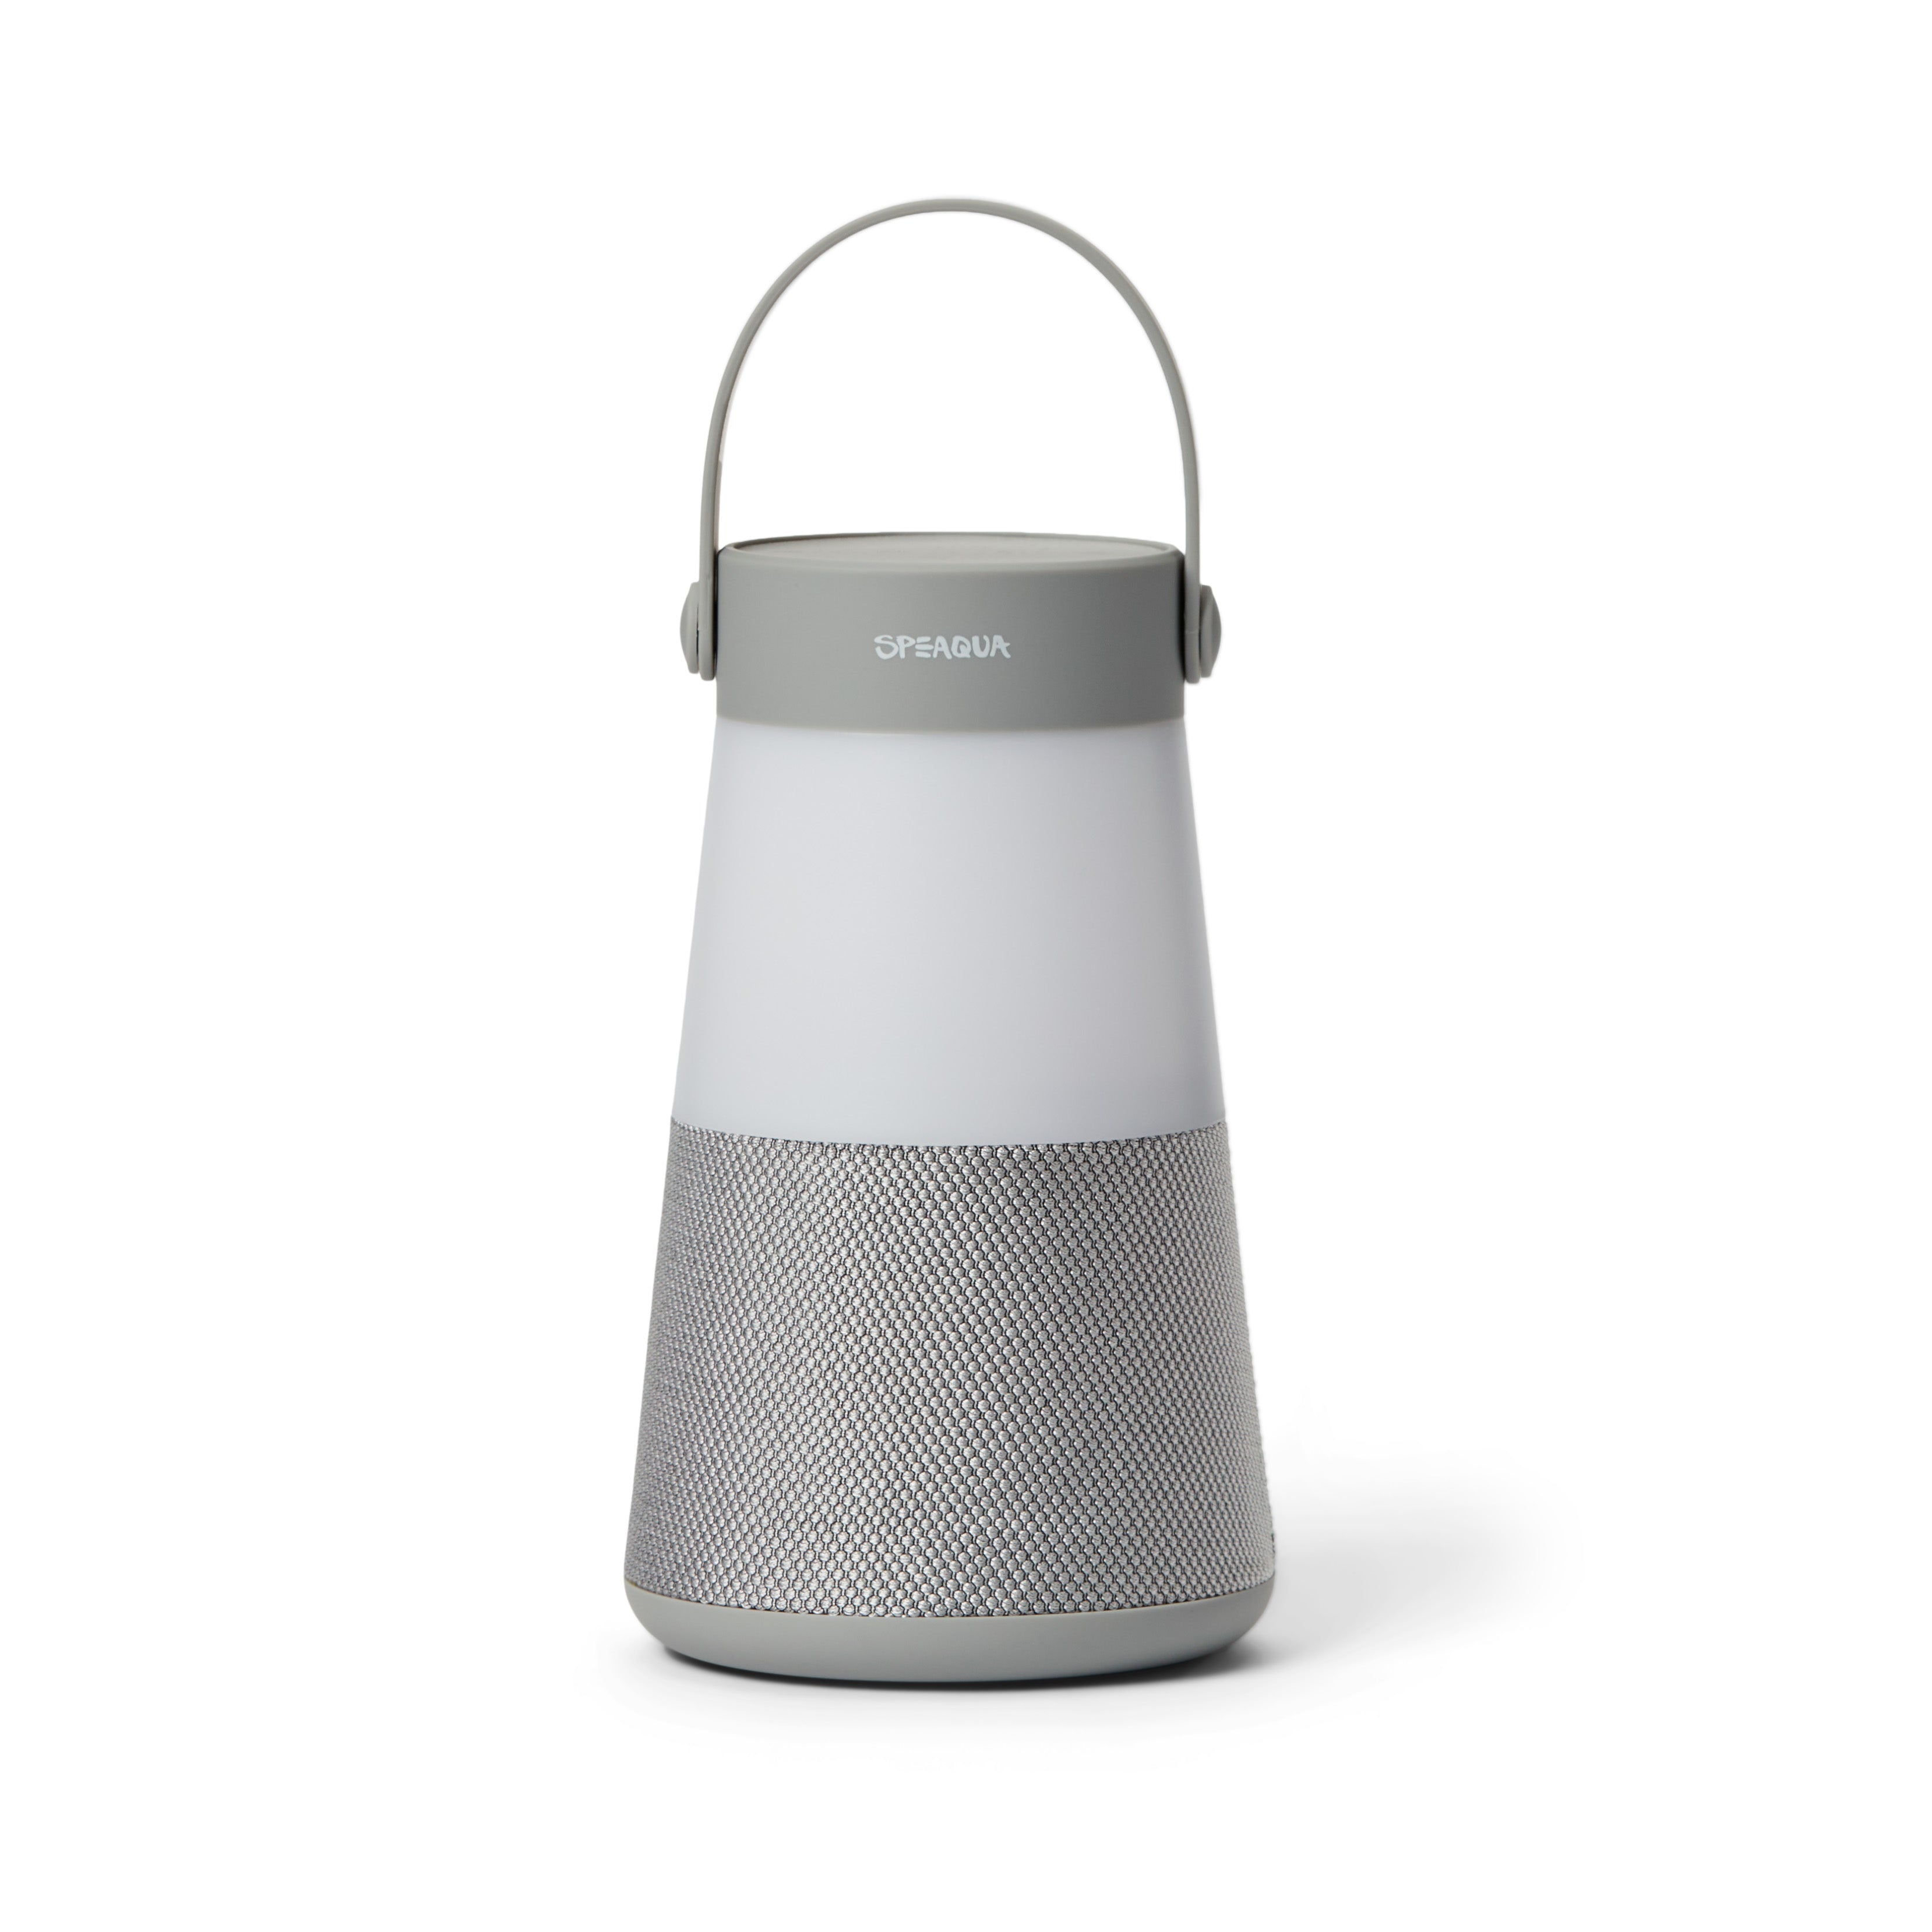 The Lantern Speaker – Speaqua